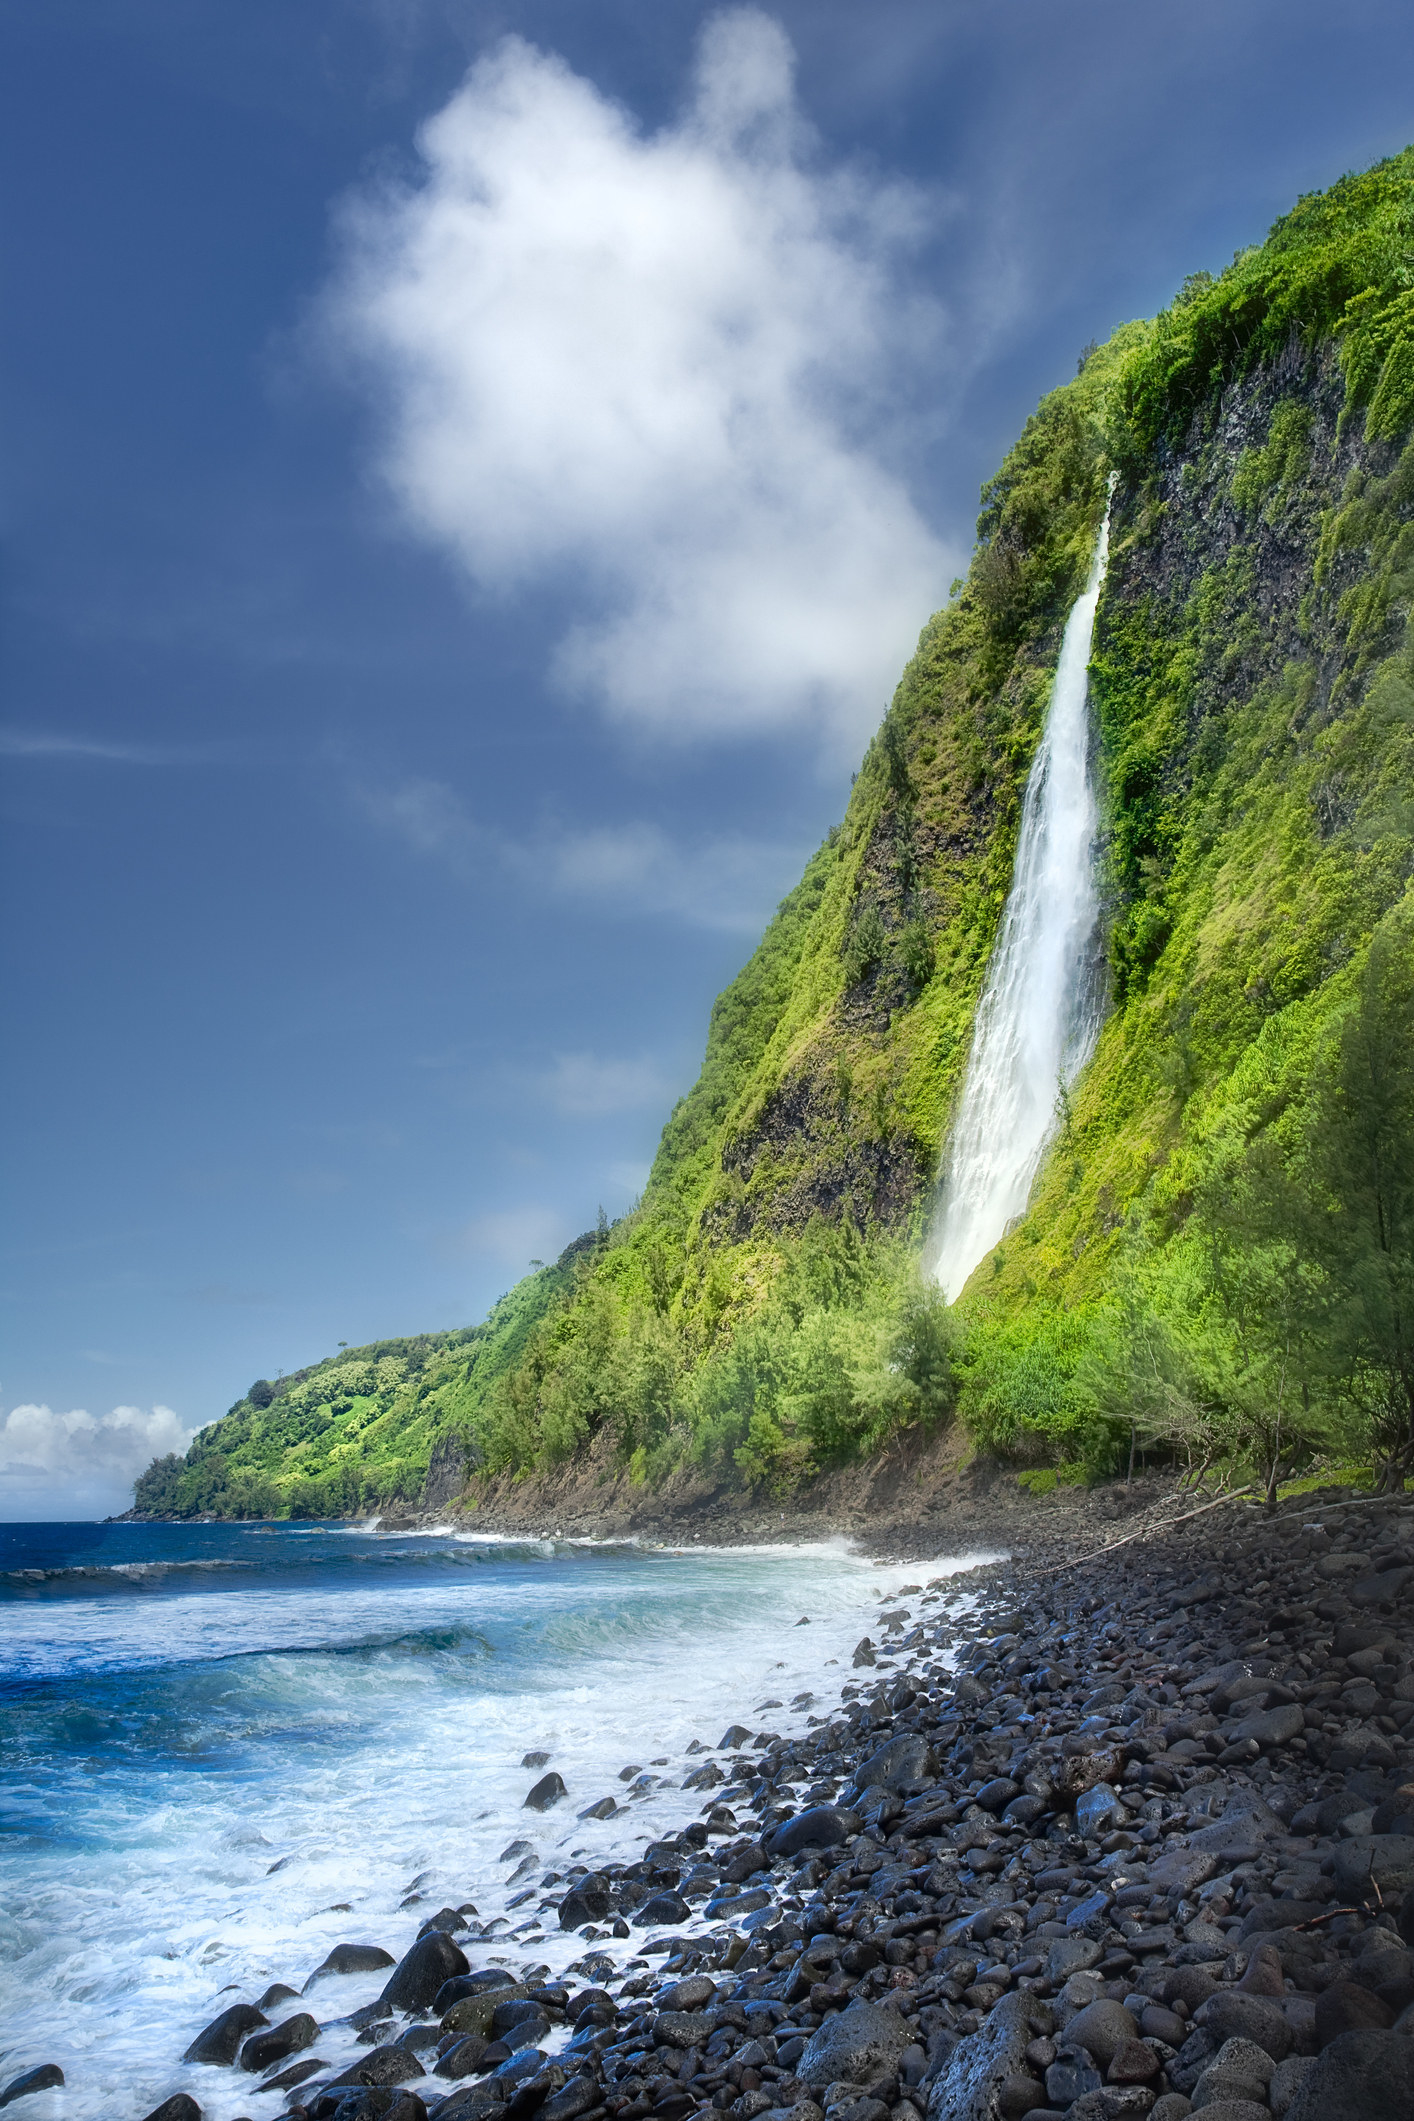 A waterfall against the ocean in Hawaii